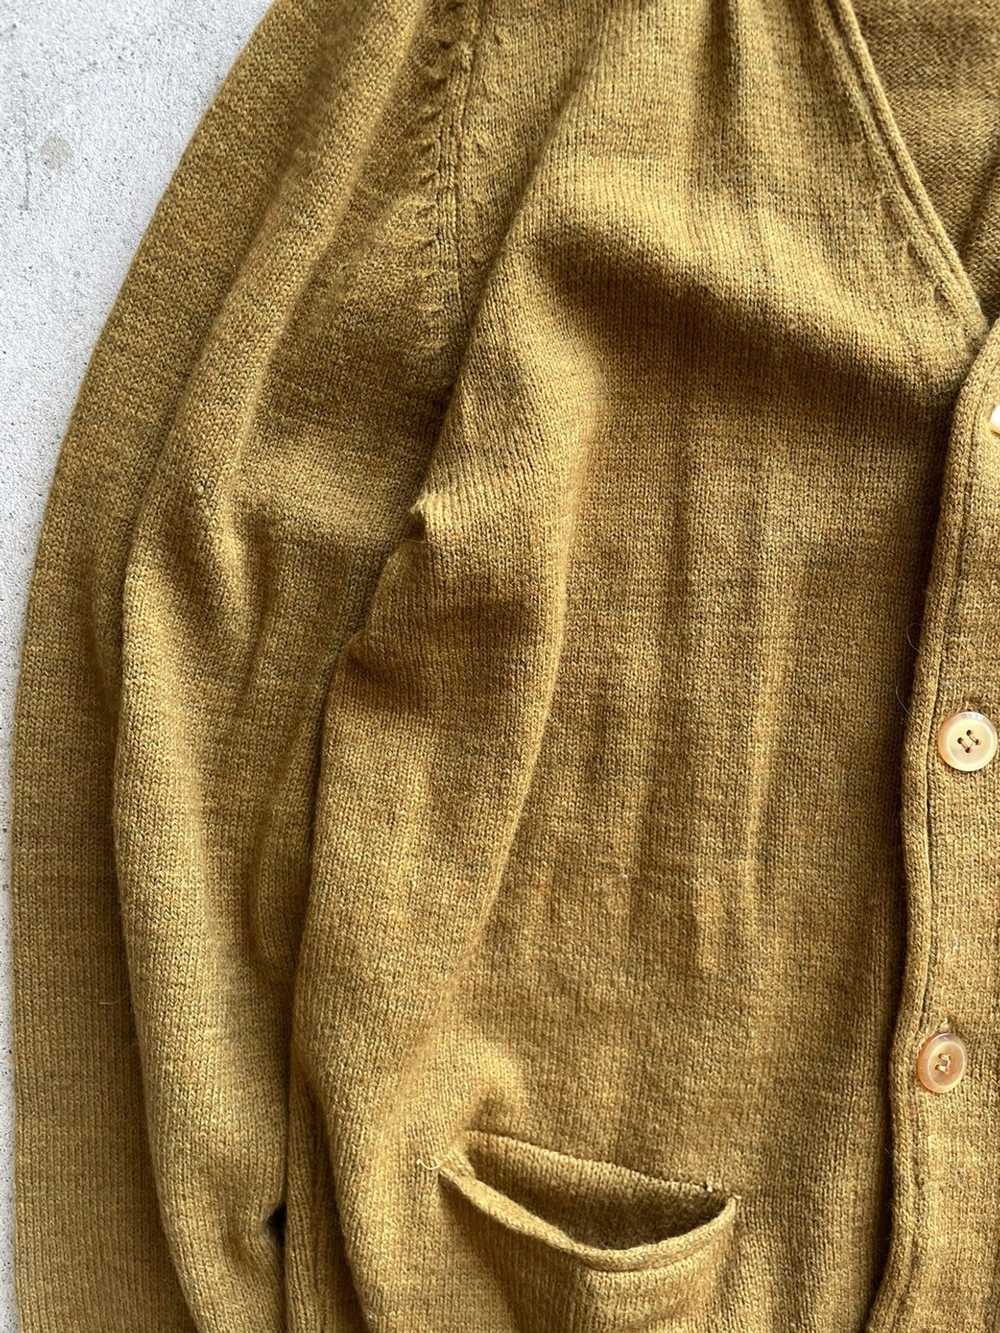 Vintage Vintage knit acrylic cardigan - image 5